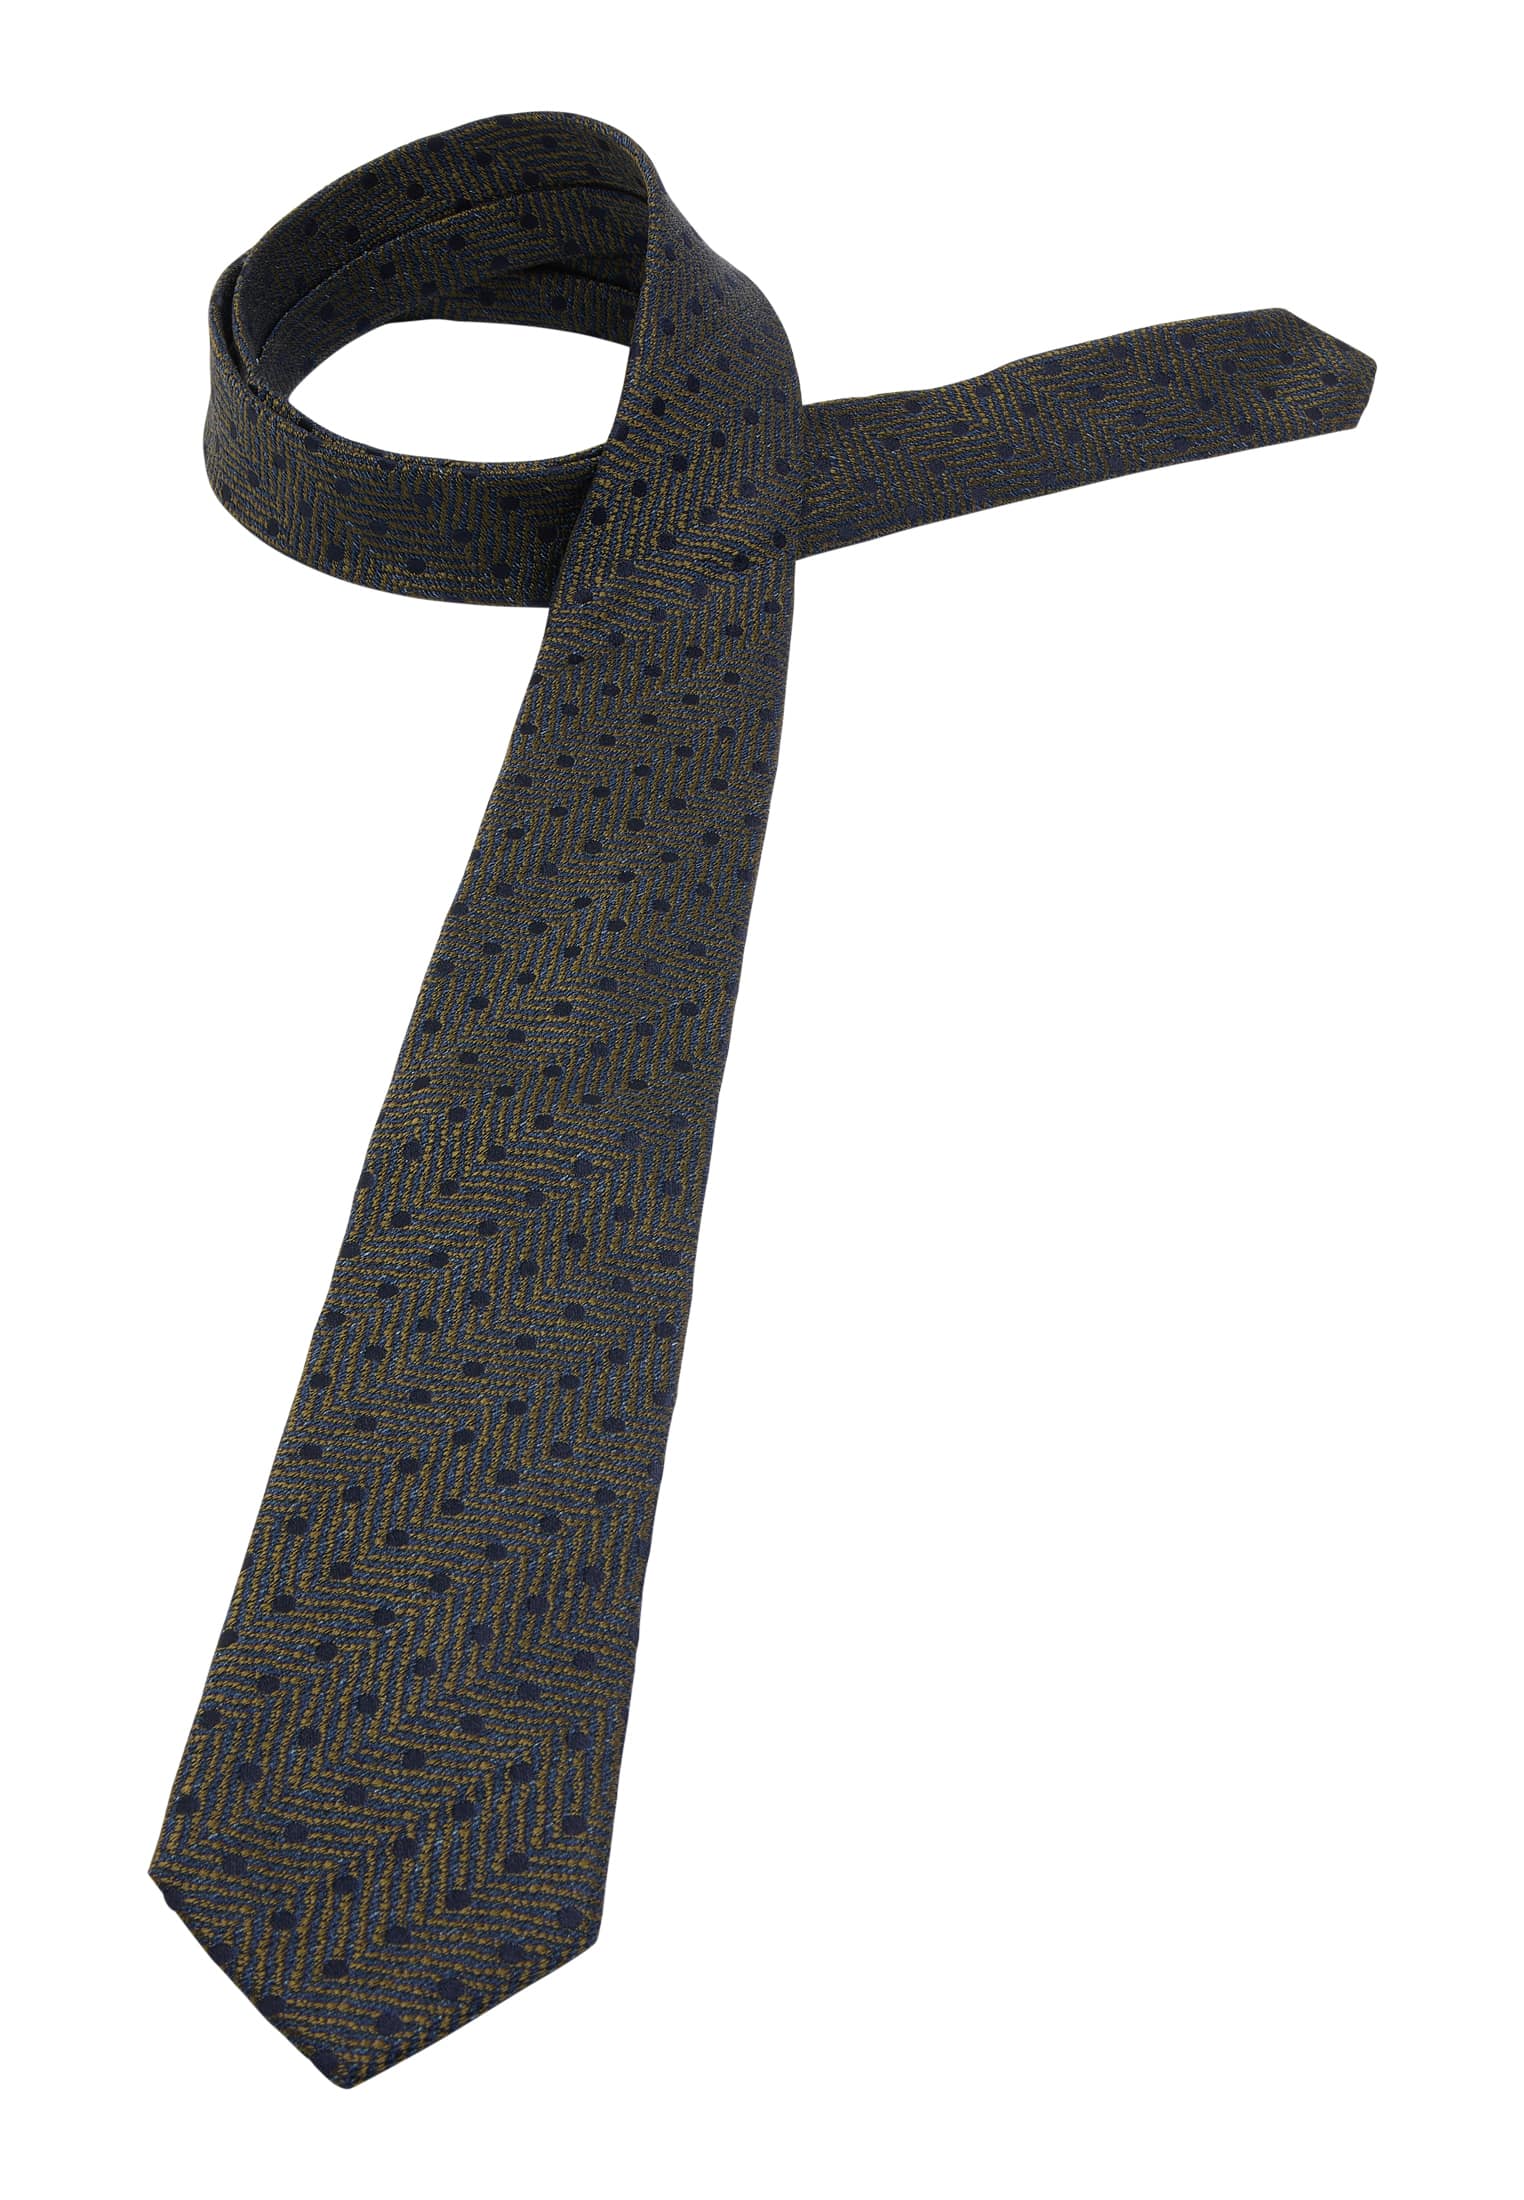 Krawatte in khaki strukturiert | 1AC01933-04-52-142 | 142 khaki 